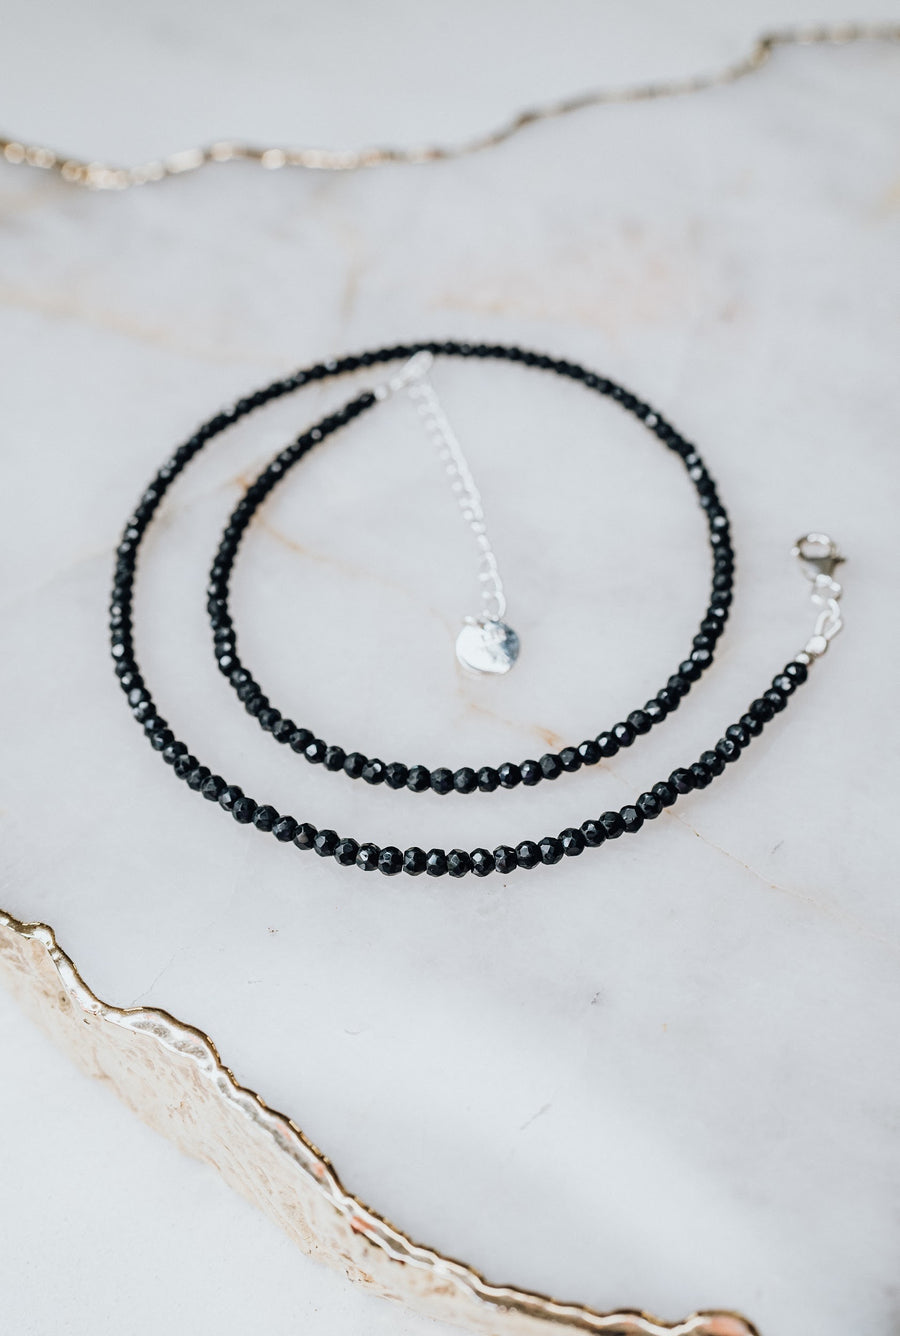 Black Onyx silver necklace